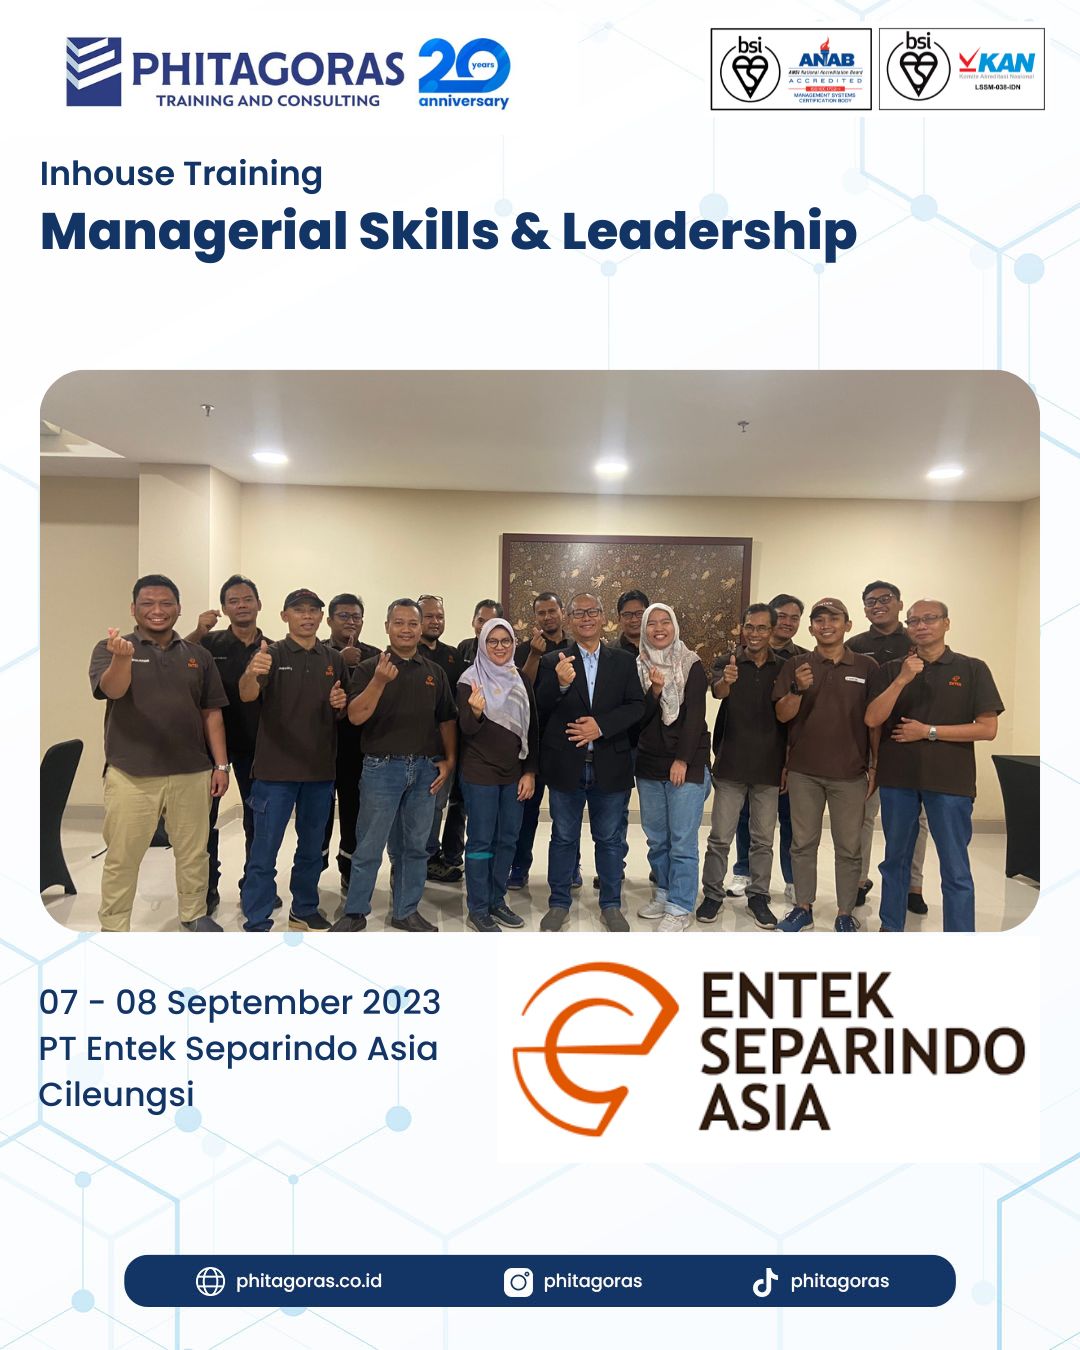 Inhouse Training Managerial Skills & Leadership - PT Entek Separindo Asia